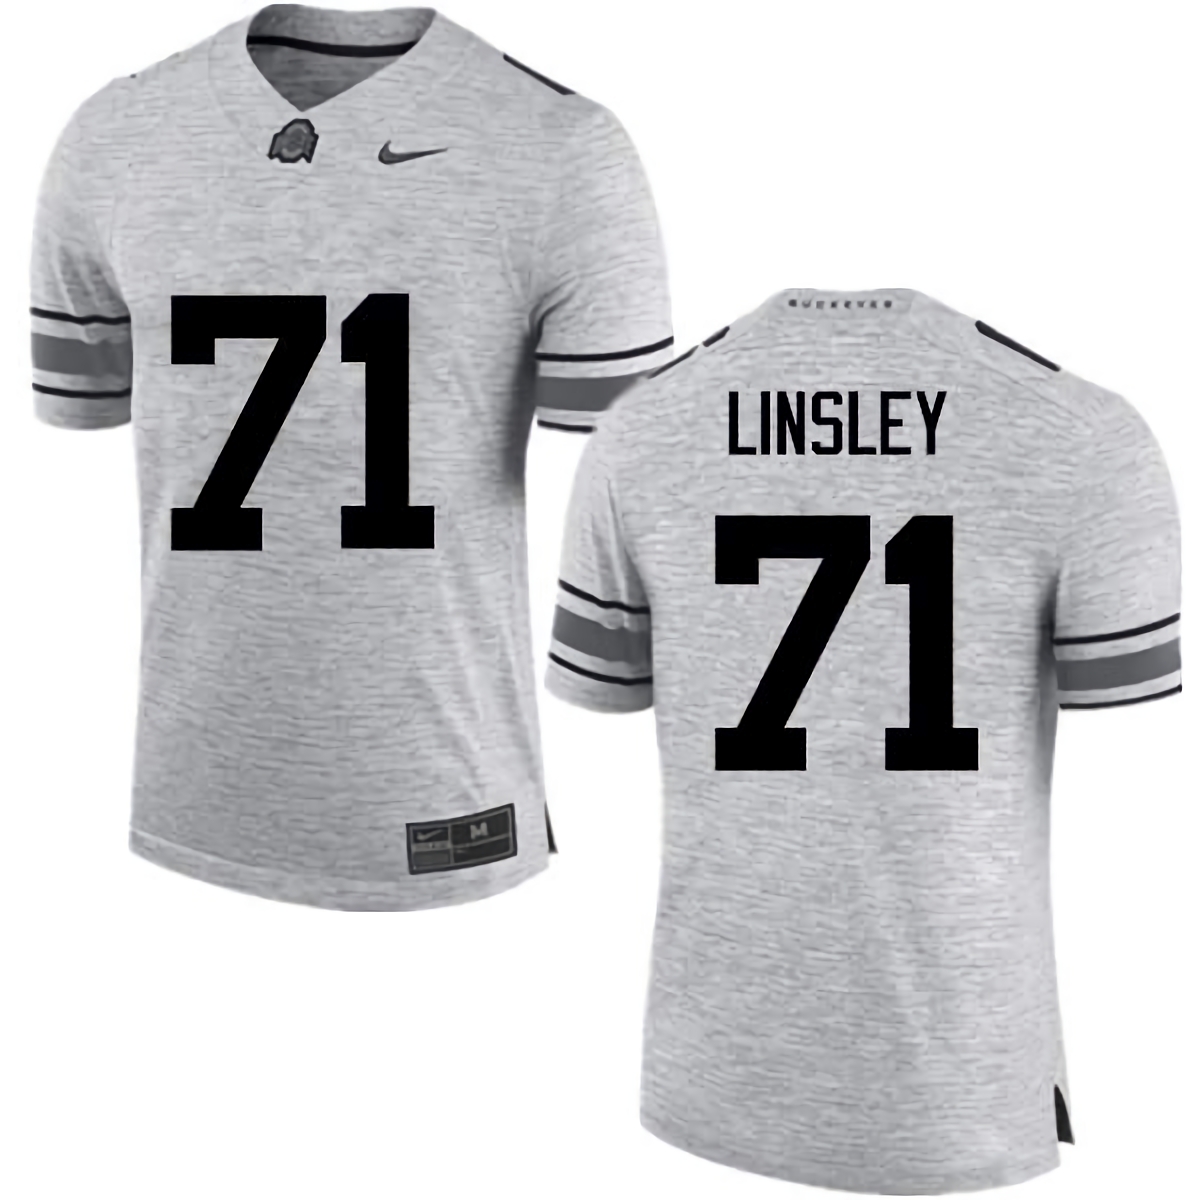 Corey Linsley Ohio State Buckeyes Men's NCAA #71 Nike Gray College Stitched Football Jersey BJF1556BU